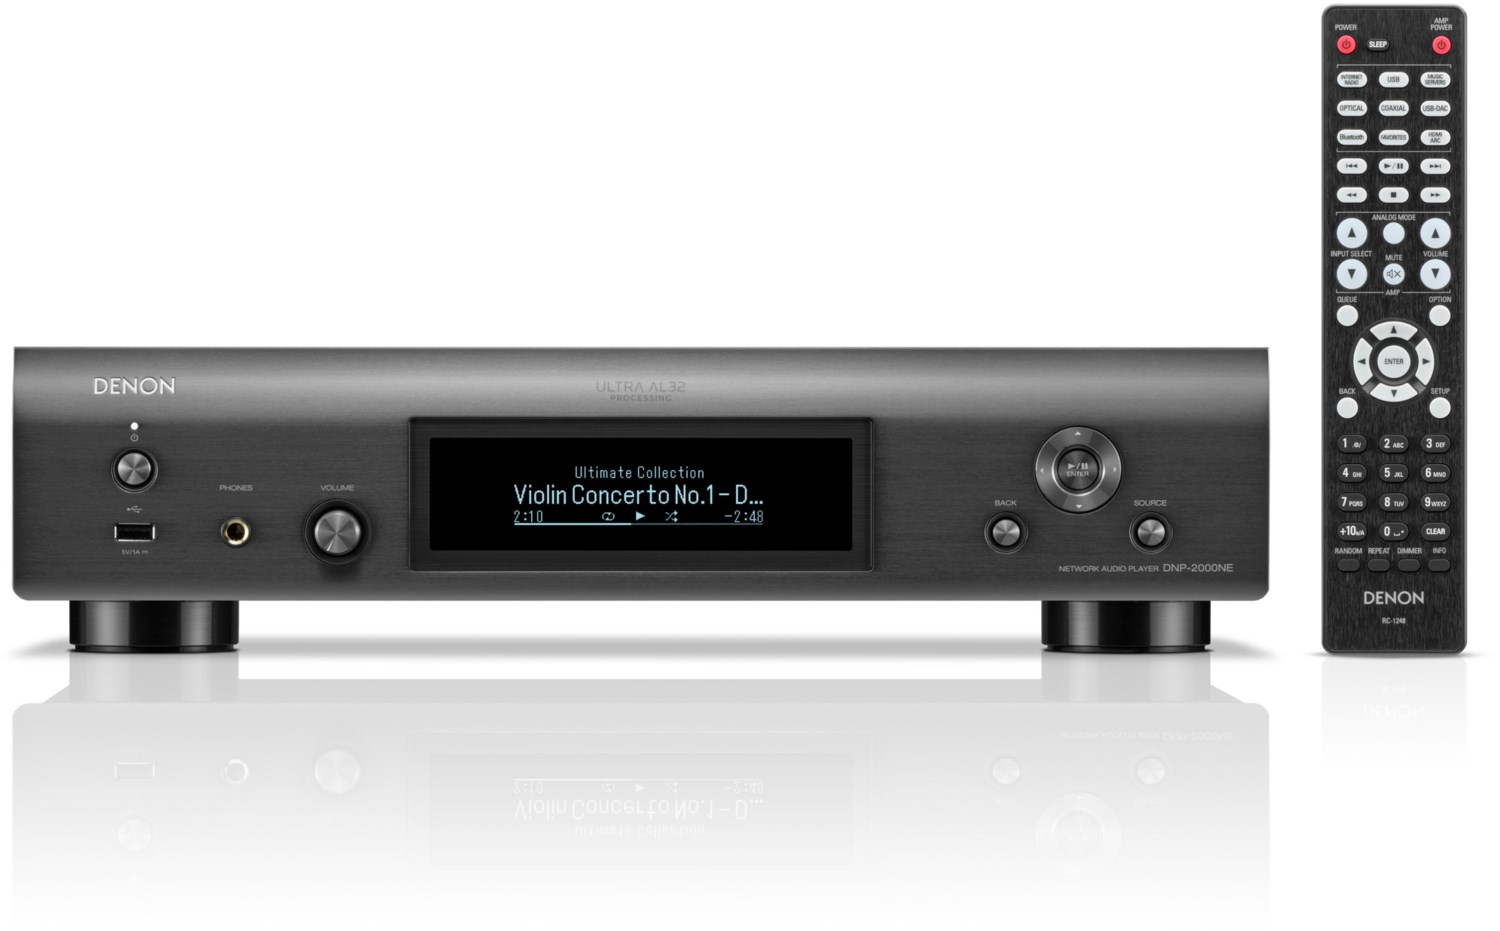 DNP-2000NE Audio Streamer silber-graphit